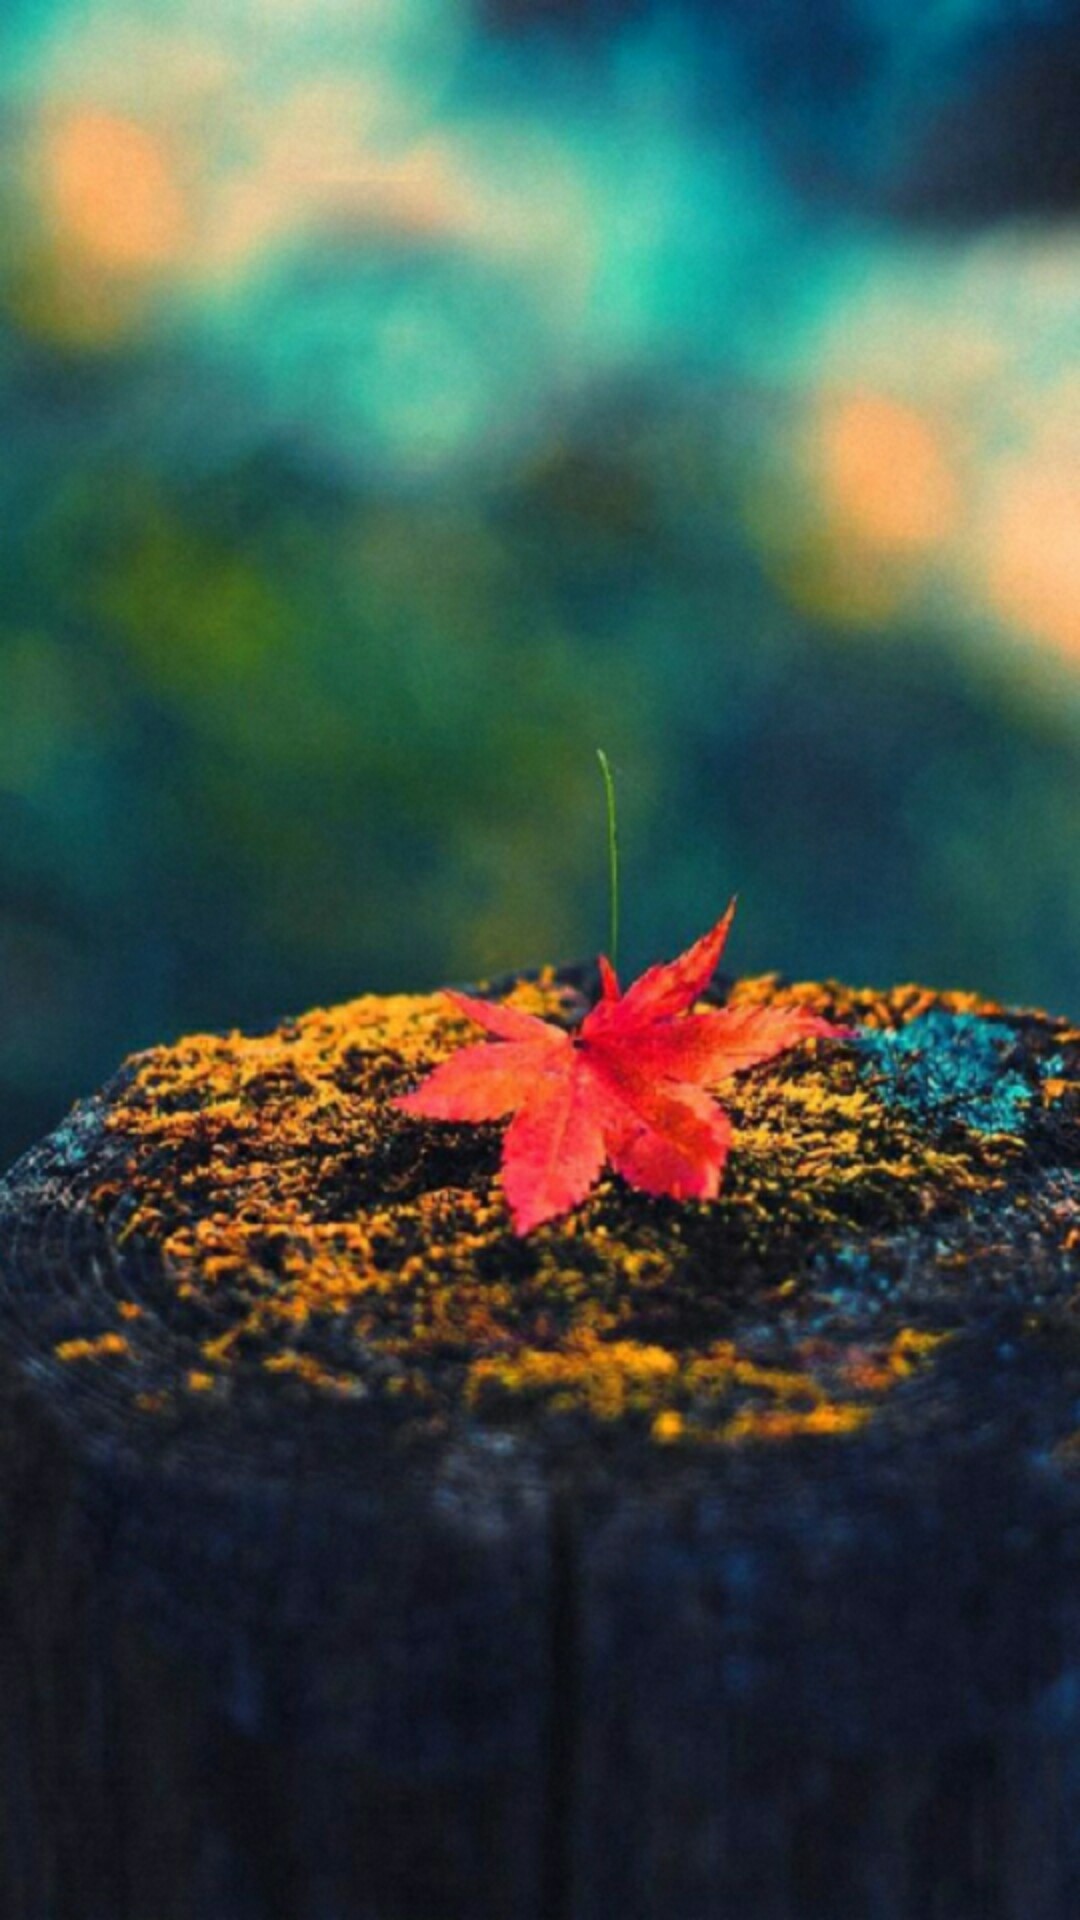 1080x1920 Maple leaf cellphone wallpaper lock screen, Fall, Autumn leaves, moss, tree  stump